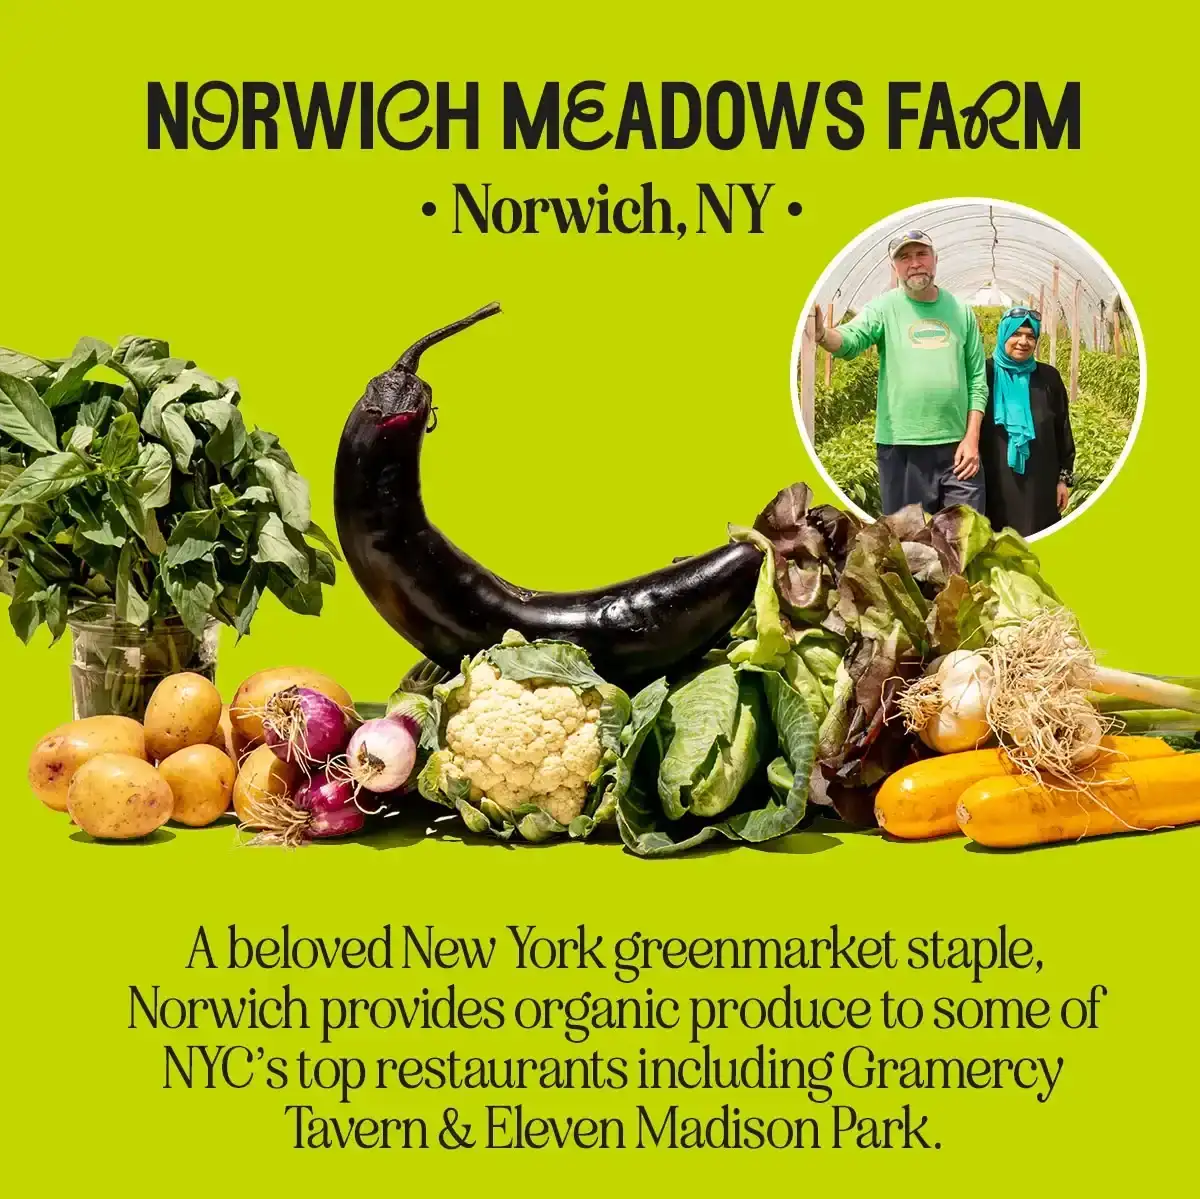 Norwich Meadows Farm